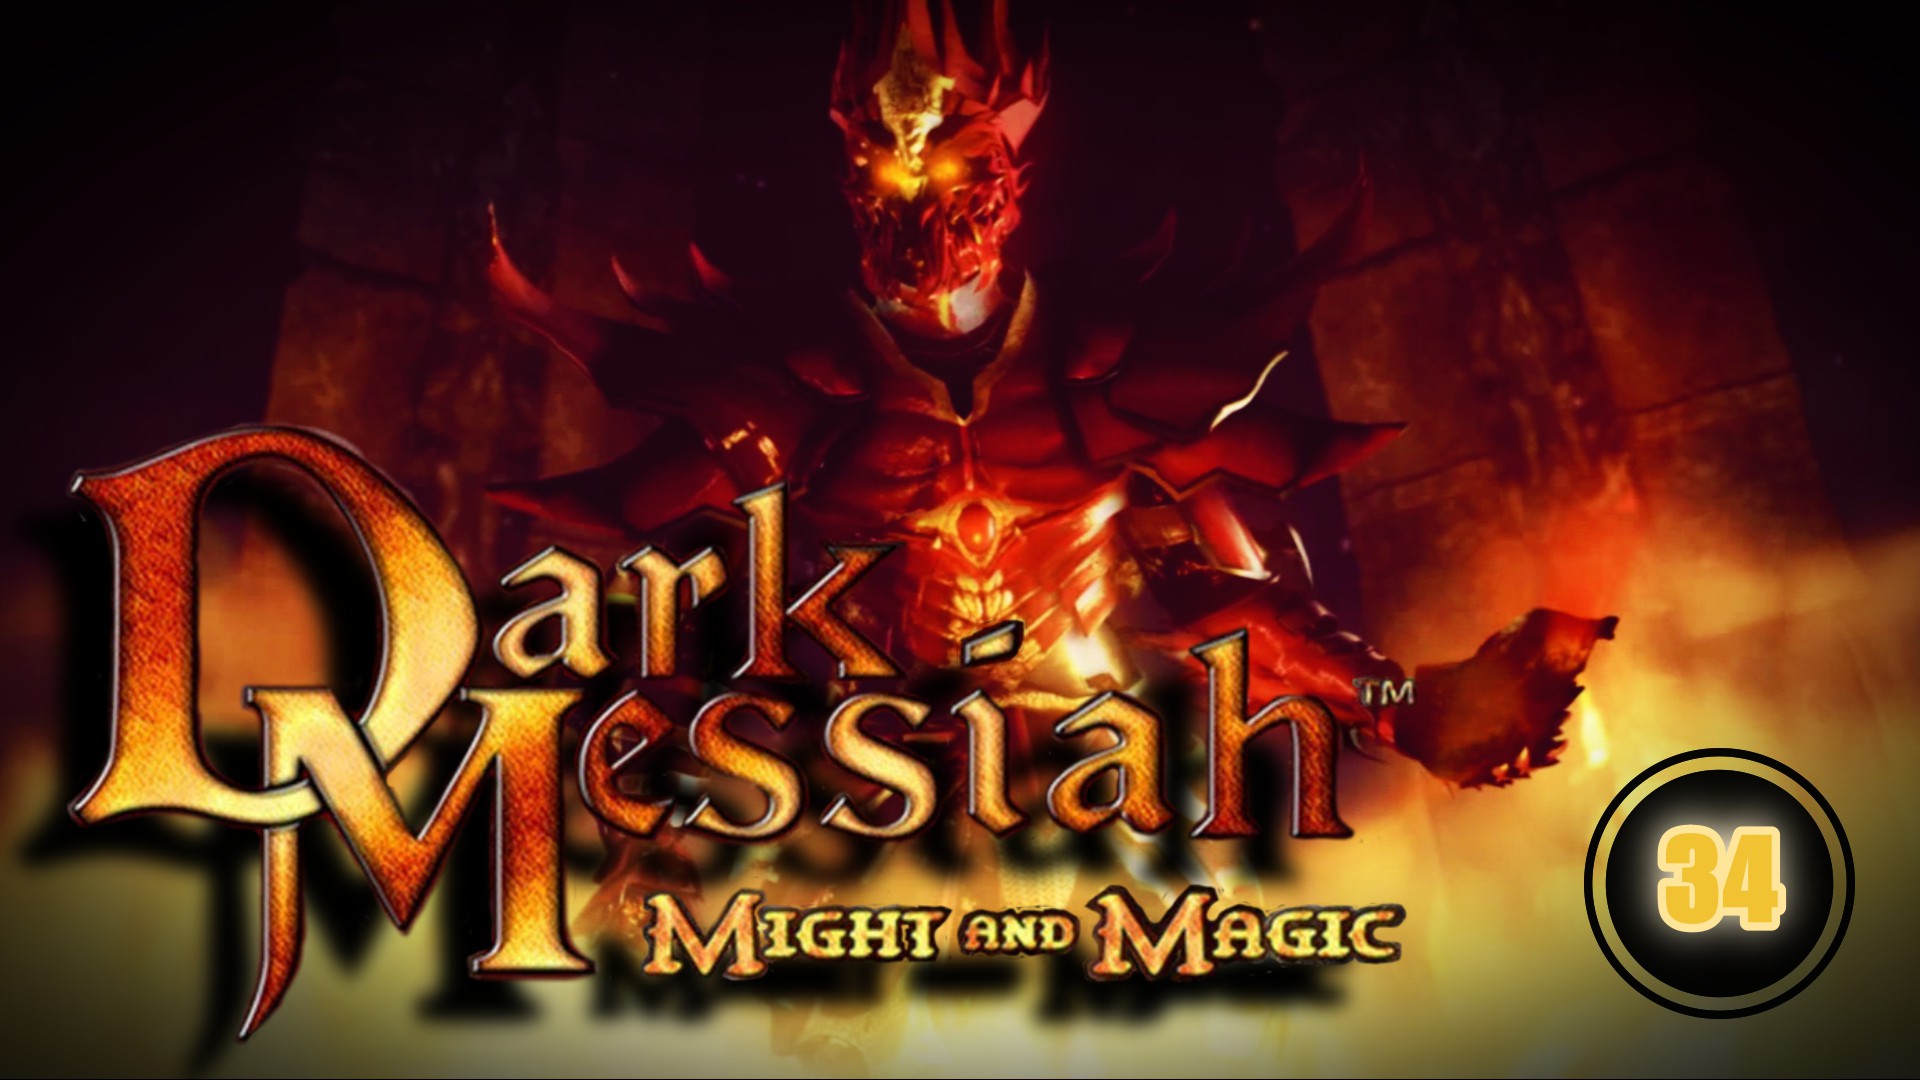 Dark Messiah of Might and Magic 34